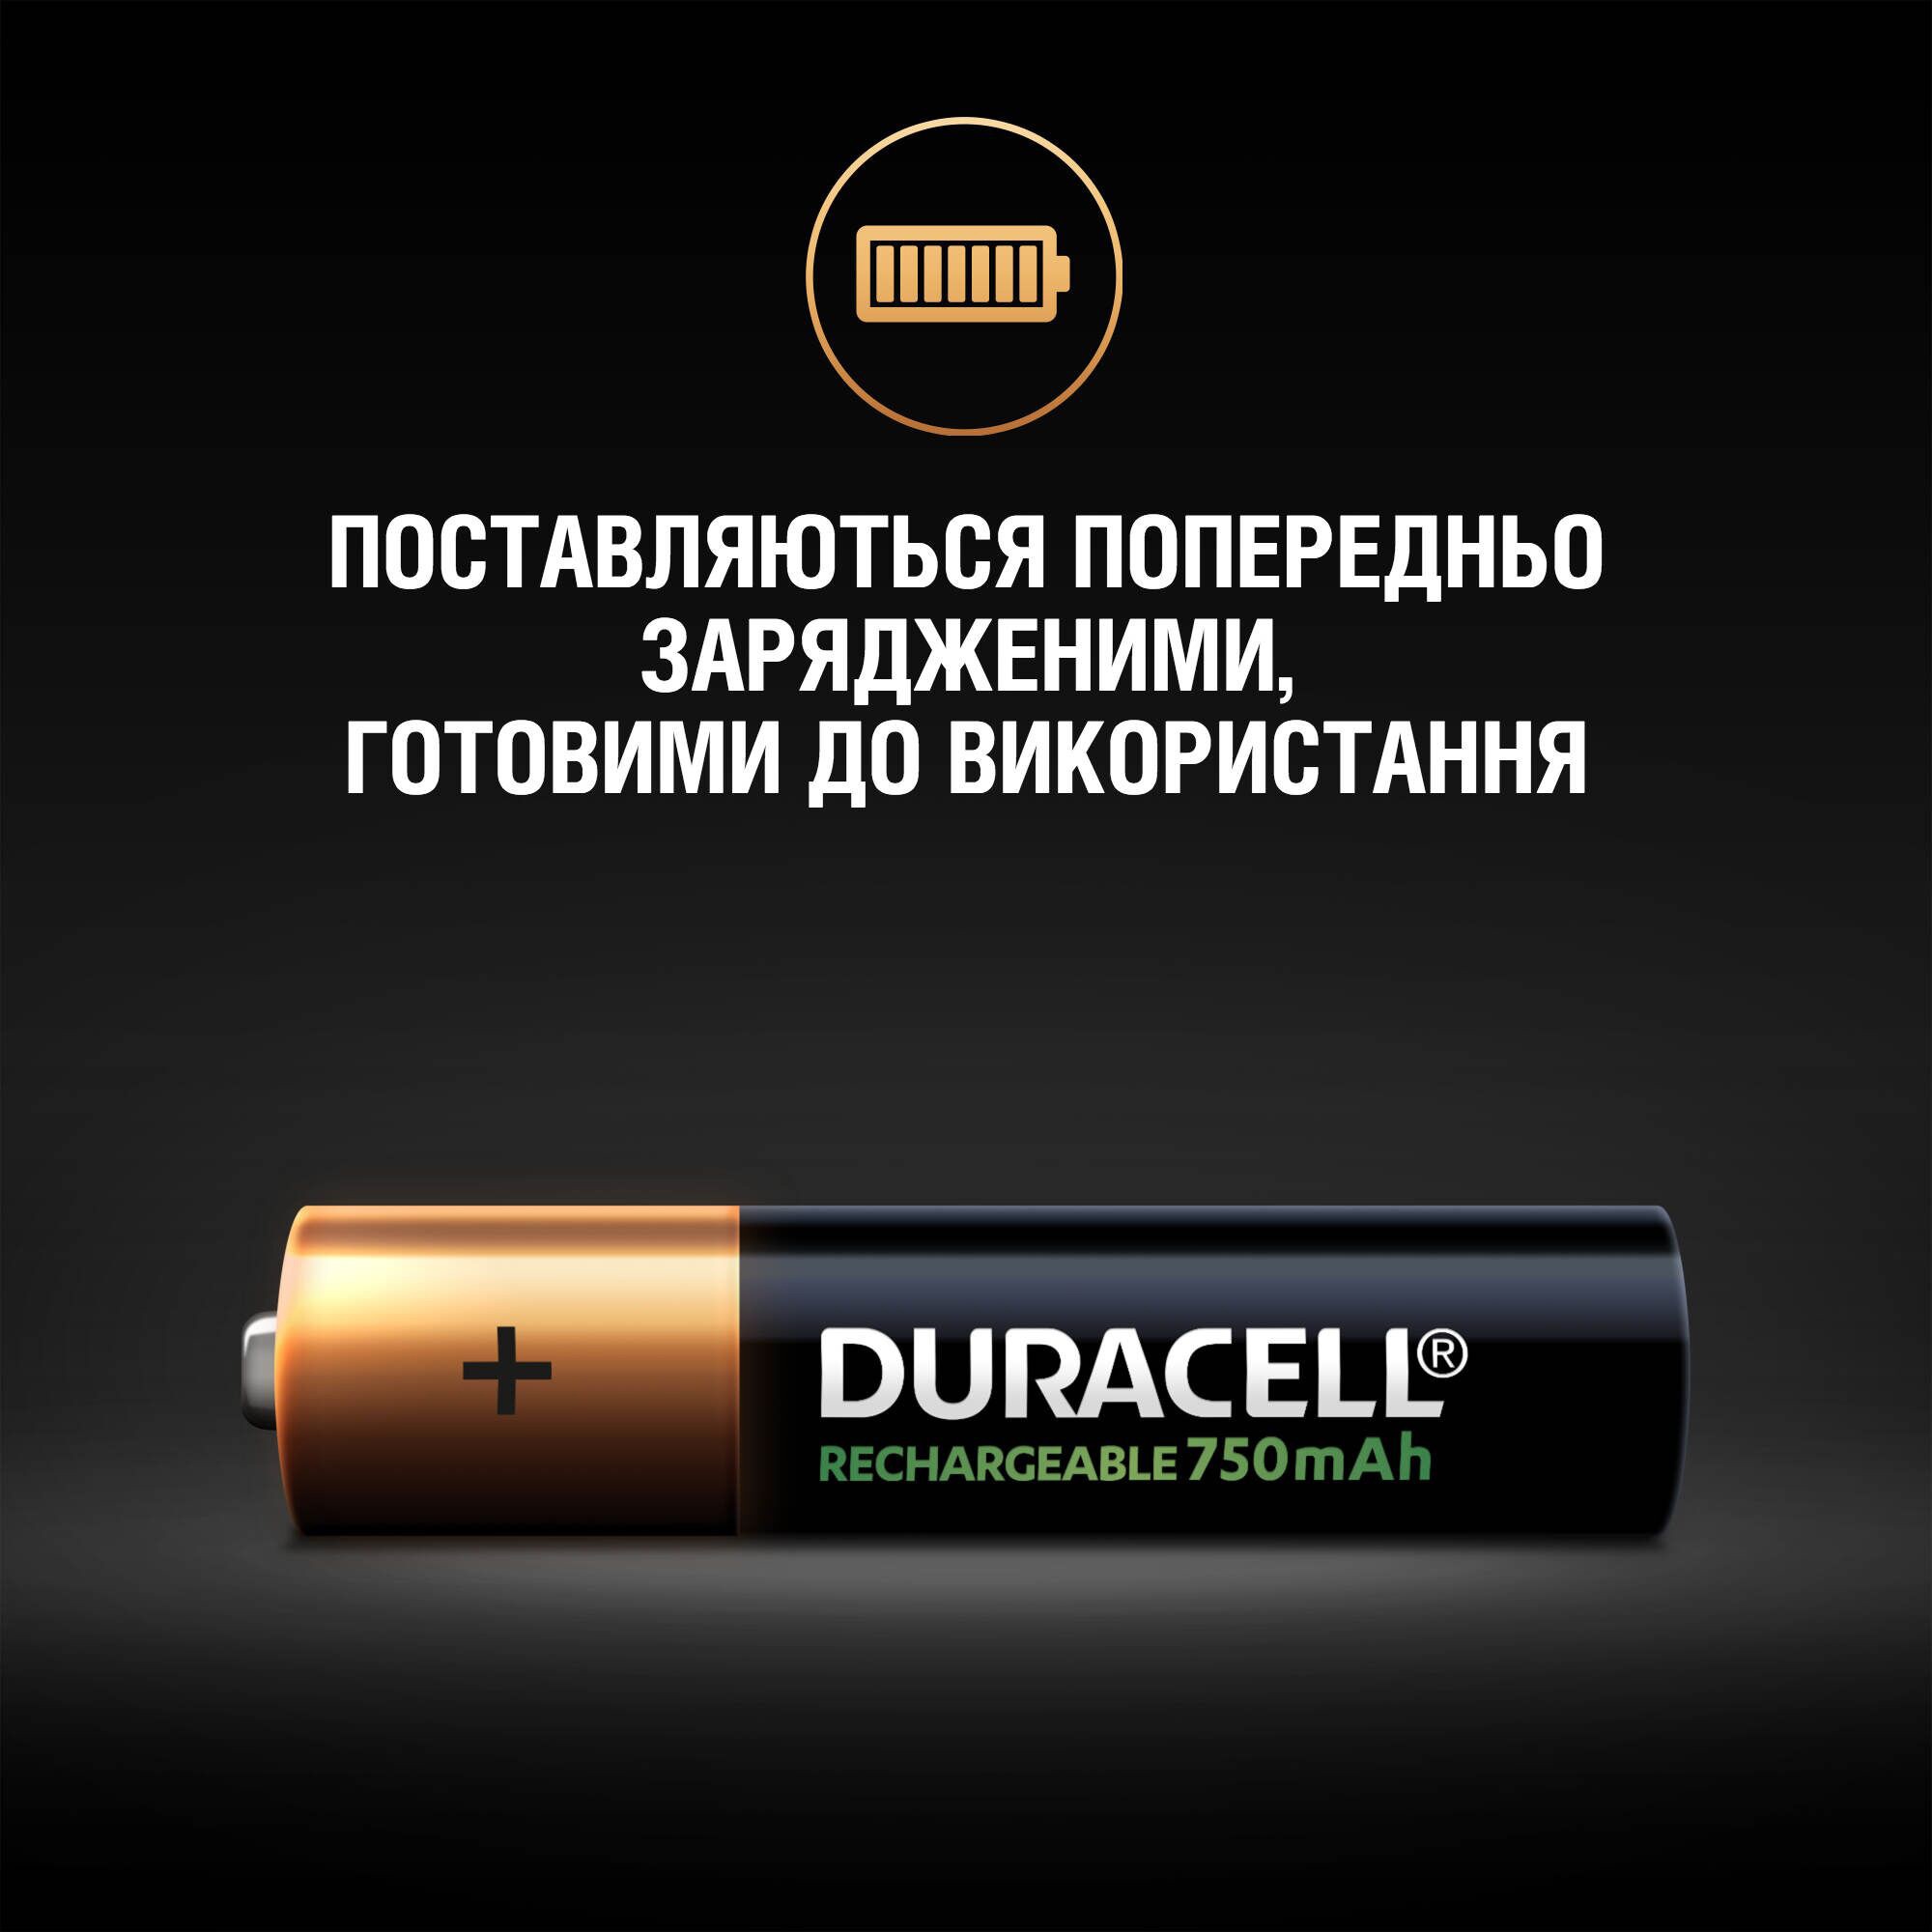 продаём Duracell Recharge AAA 750 mAh 4 шт. в Украине - фото 4